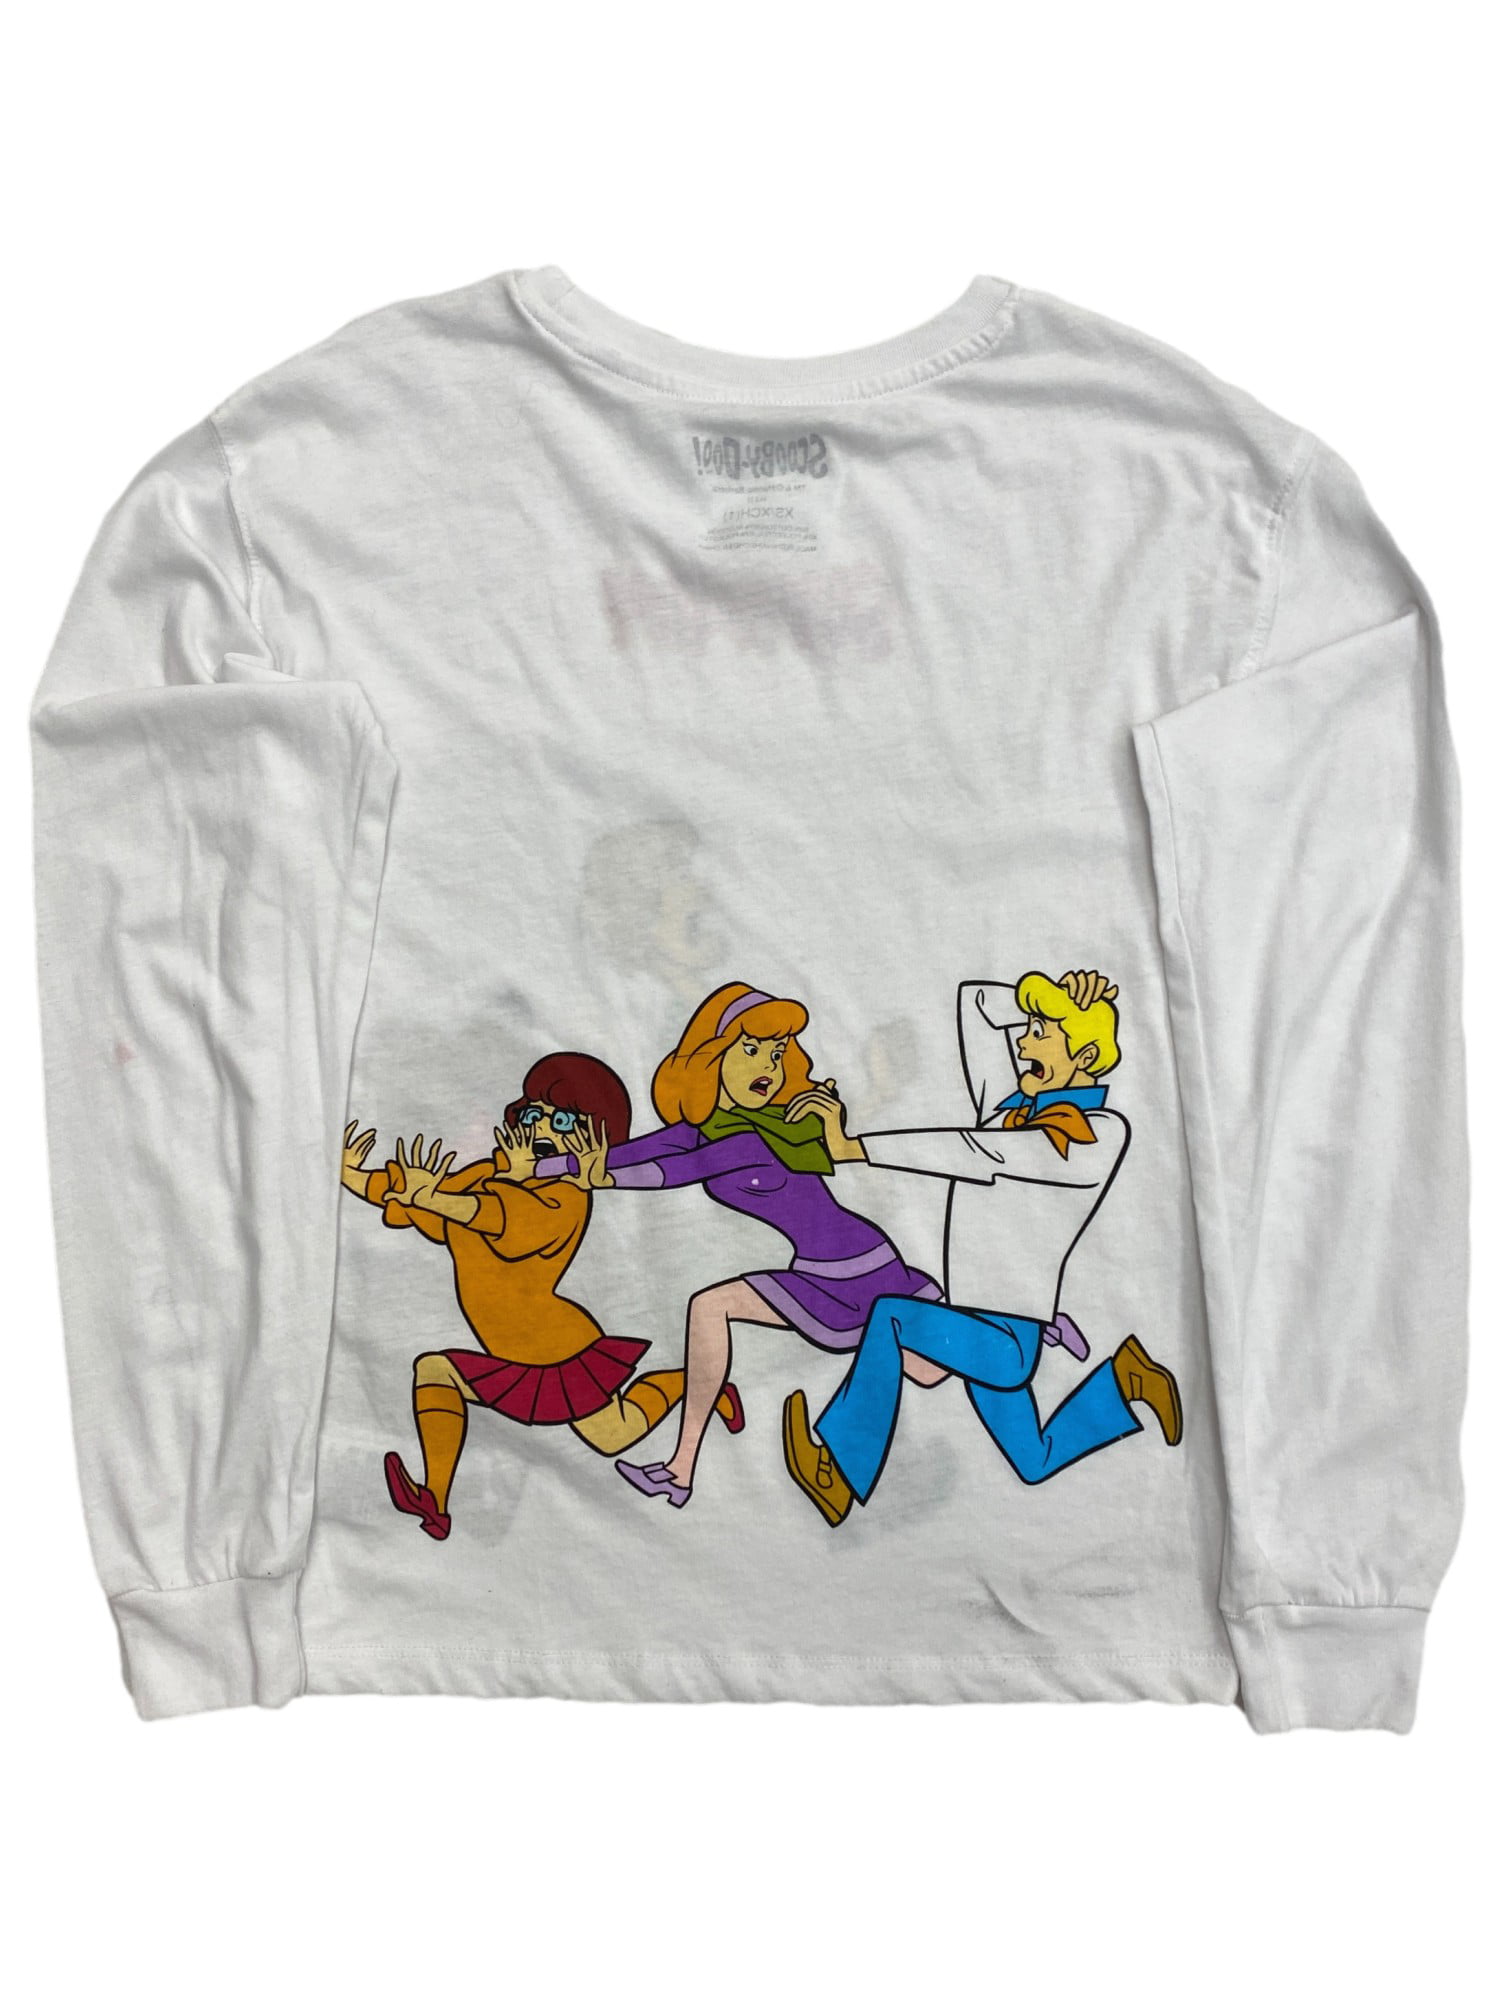 Scooby-Doo Womens (Juniors) Mint & White 2pc T-Shirt Tee Shirt Set Large